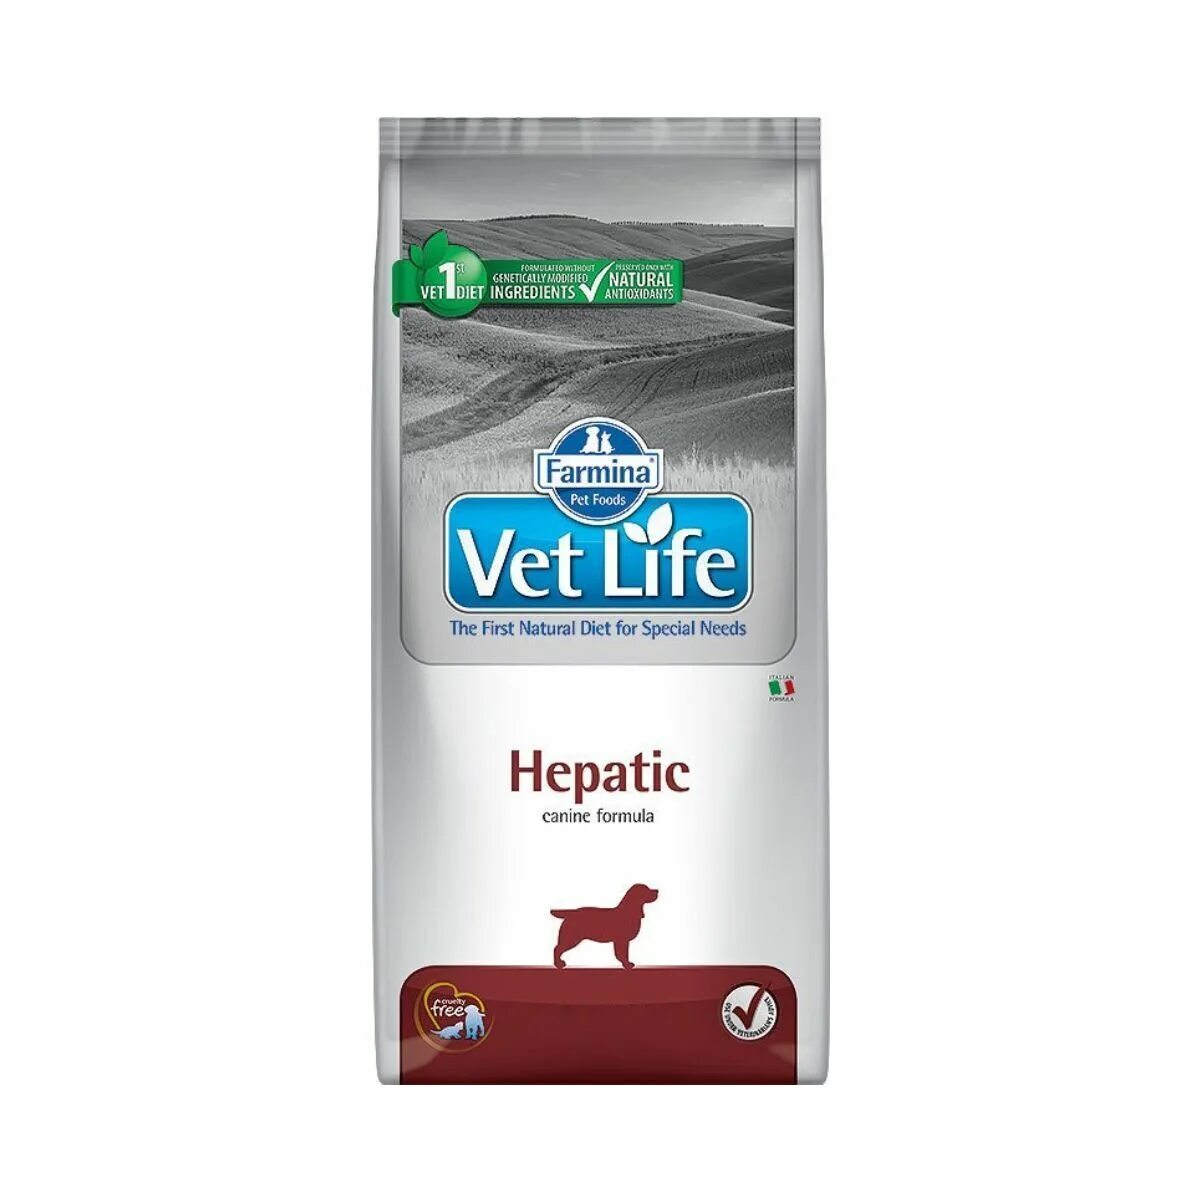 Vet life 10 кг. Корм для собак vet Life Hypoallergenic. Farmina vet Life hepatic для собак. Farmina vet Life hepatic консервы. Фармина Манагемент Струвит кошачий корм.